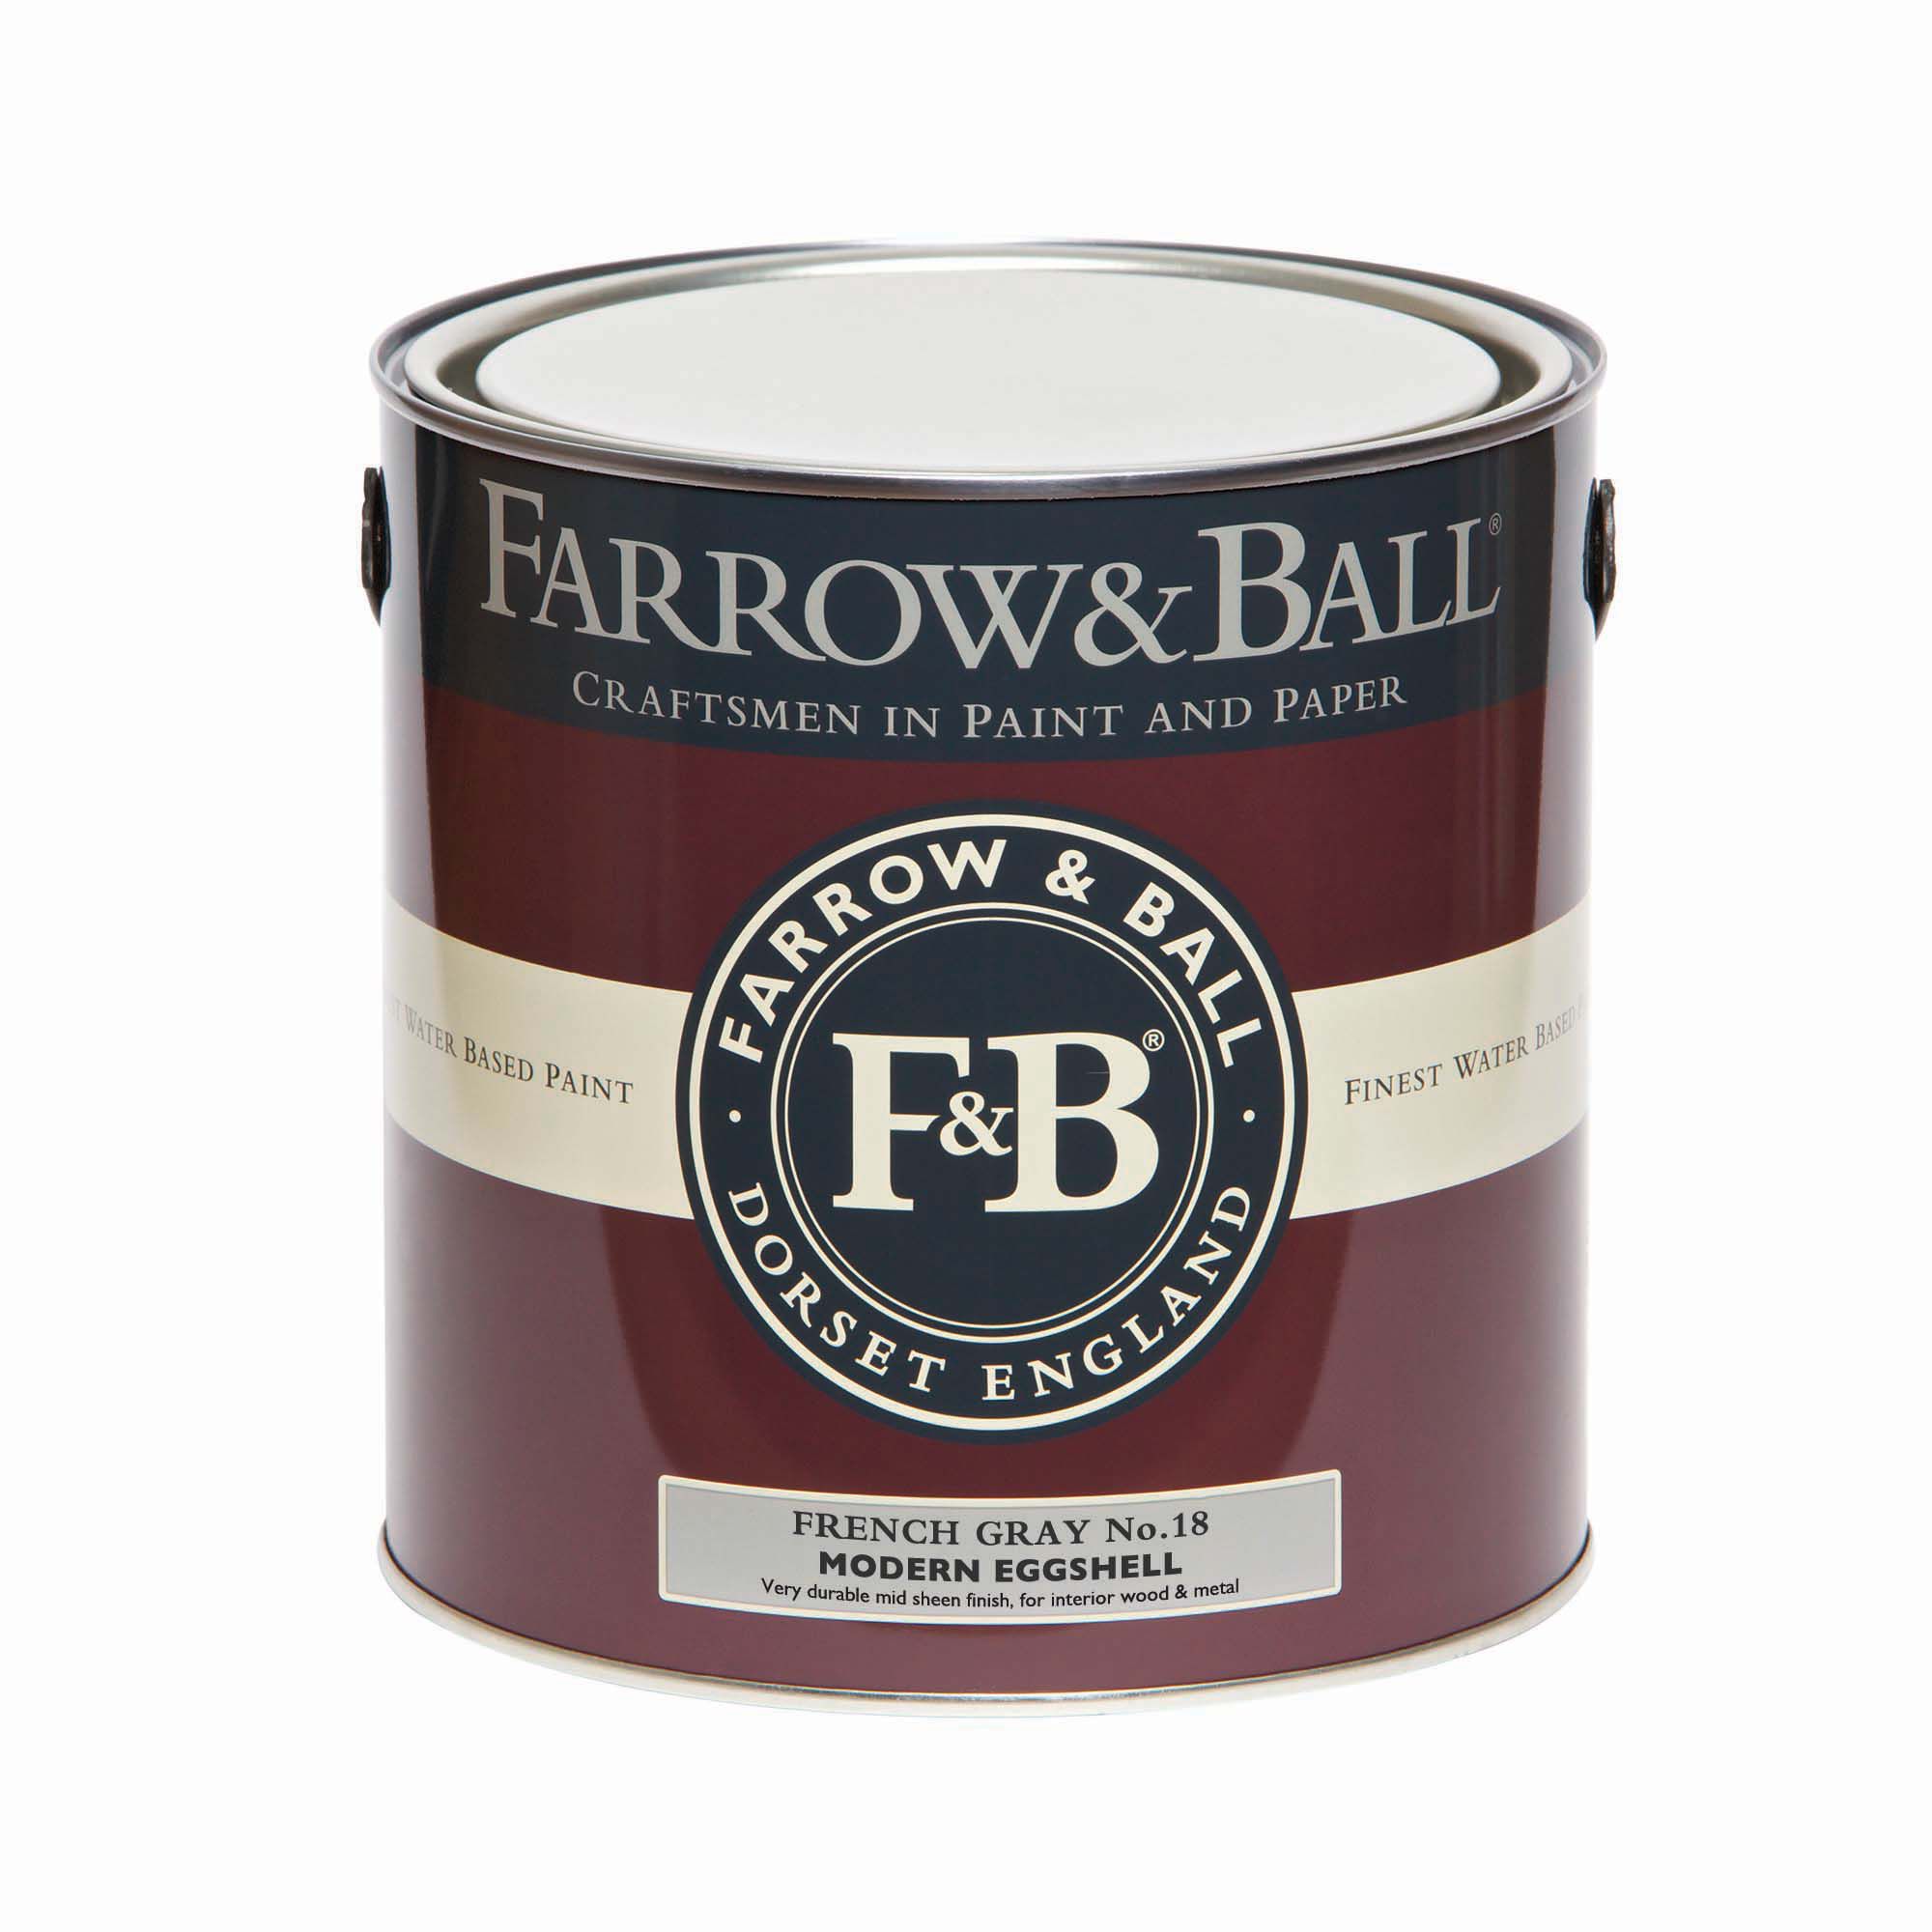 Farrow & Ball Modern French Gray No.18 Eggshell Paint, 2.5L